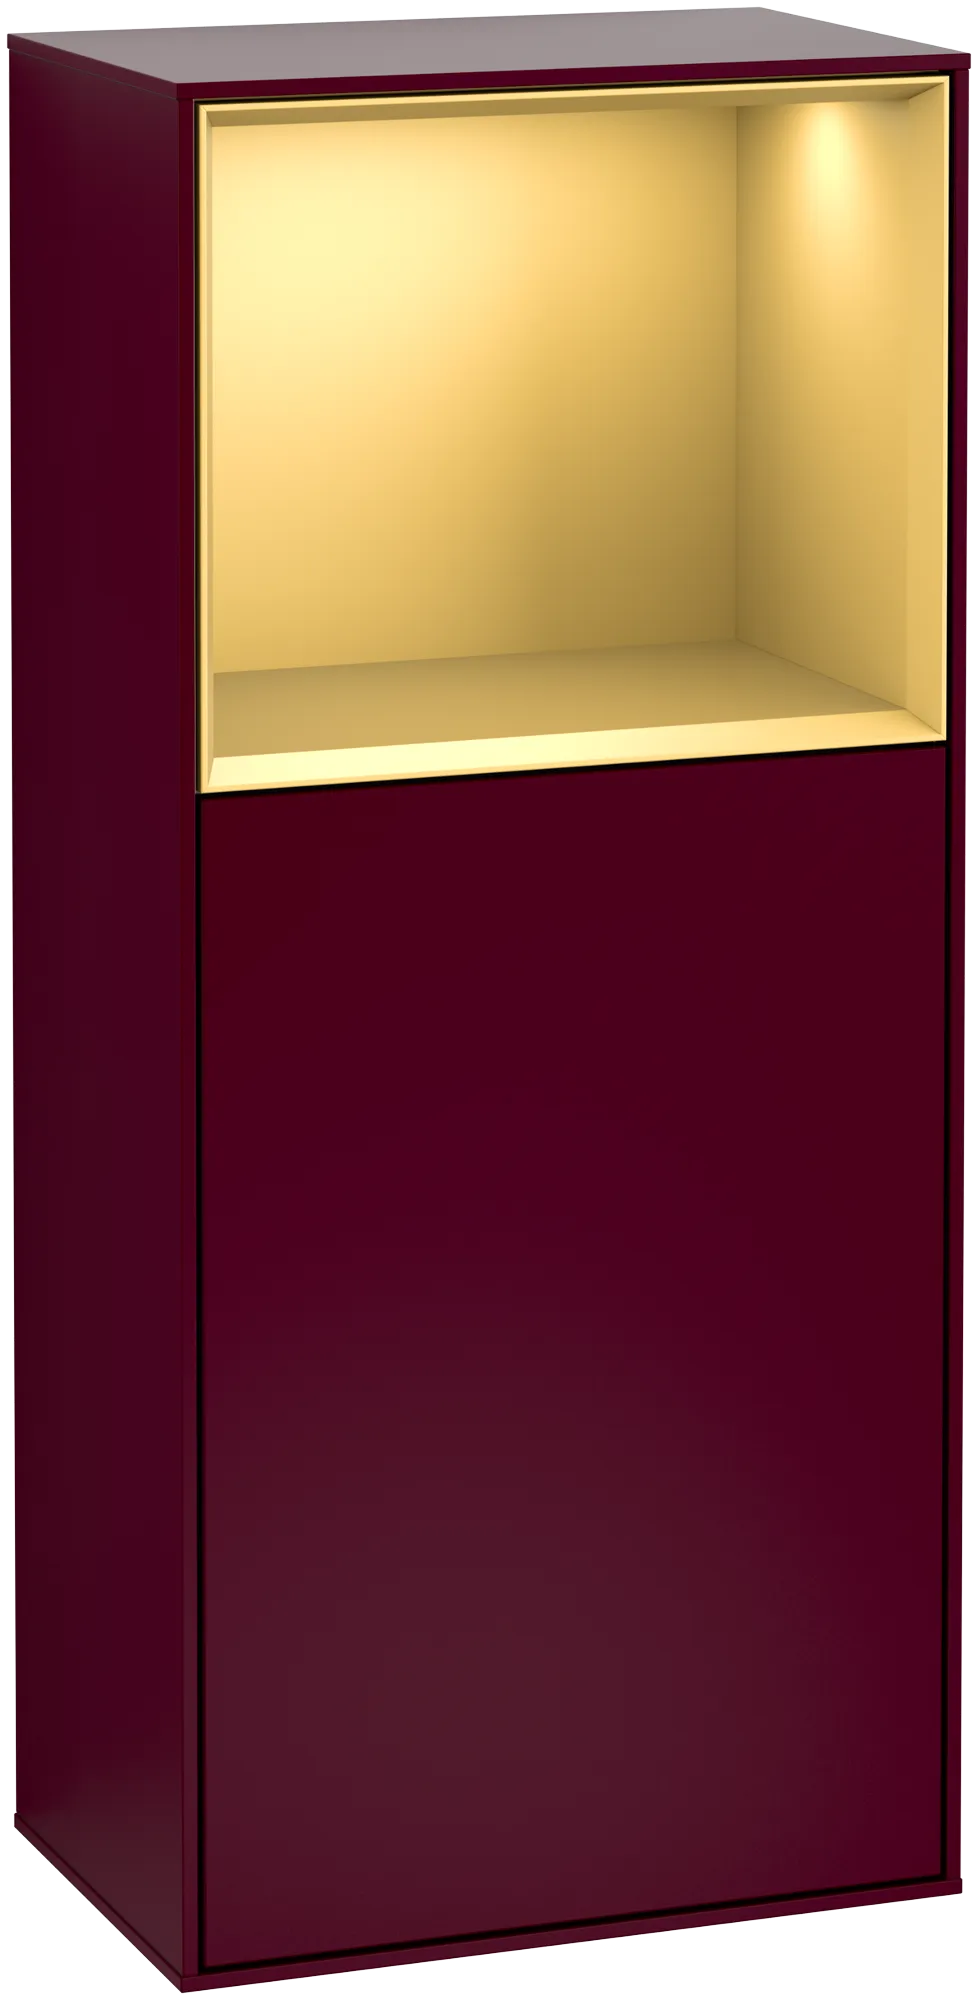 VILLEROY BOCH Finion Side cabinet, with lighting, 1 door, 418 x 936 x 270 mm, Peony Matt Lacquer / Gold Matt Lacquer #G500HFHB resmi